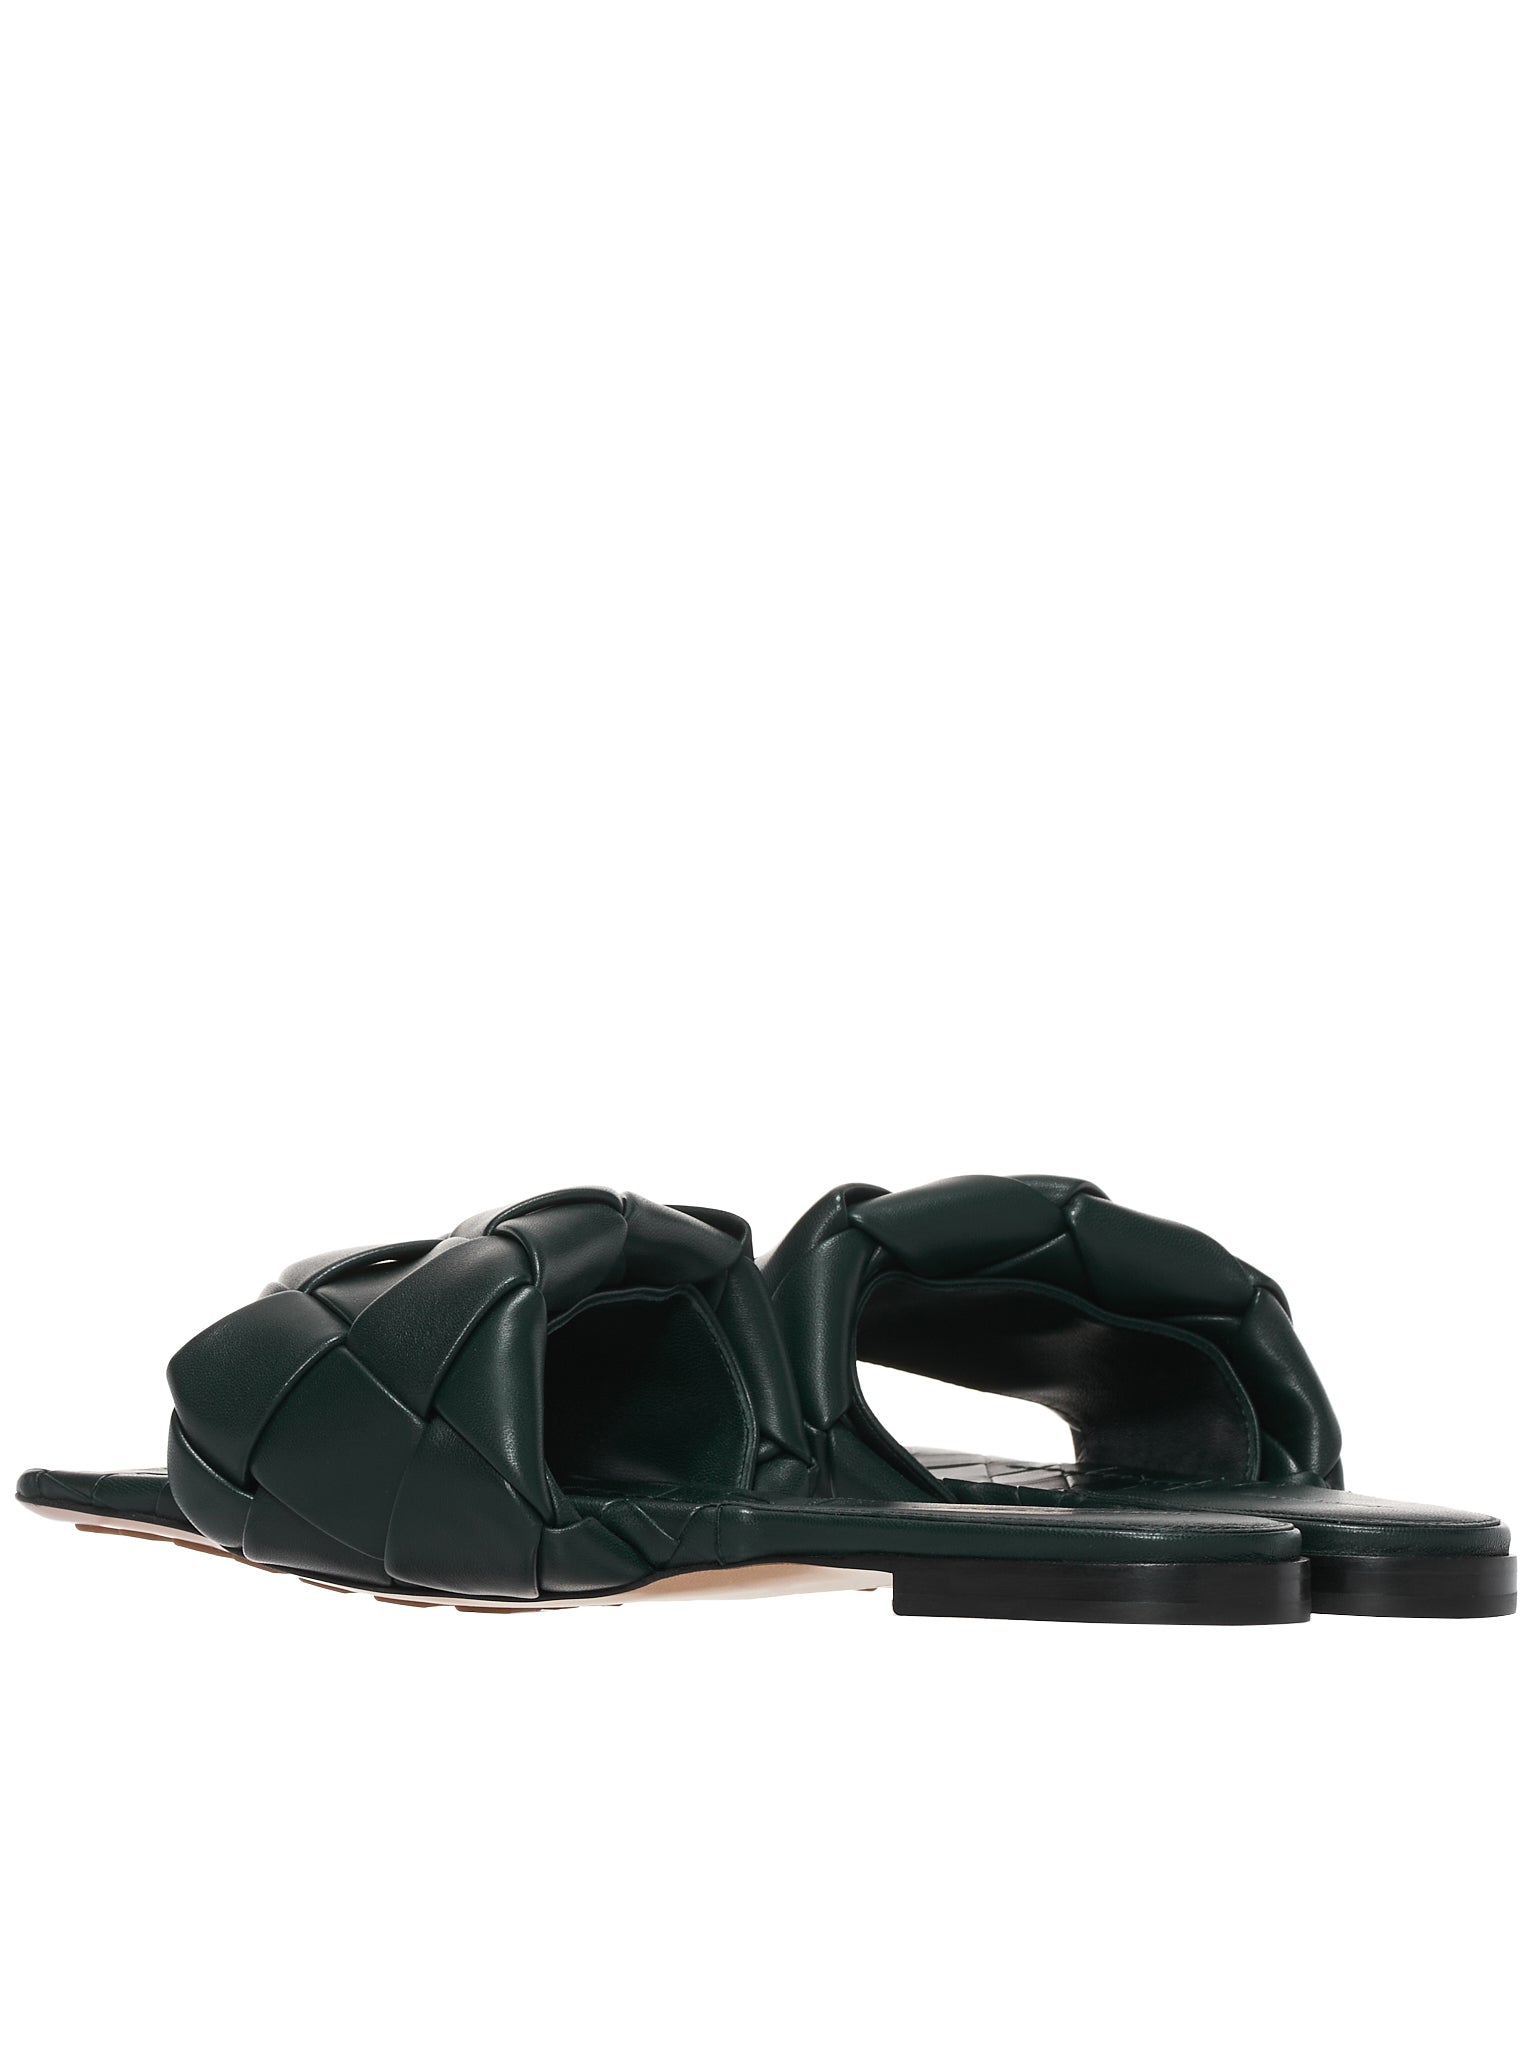 Bottega Veneta The Lido Flat Sandals | H. Lorenzo - detail 2